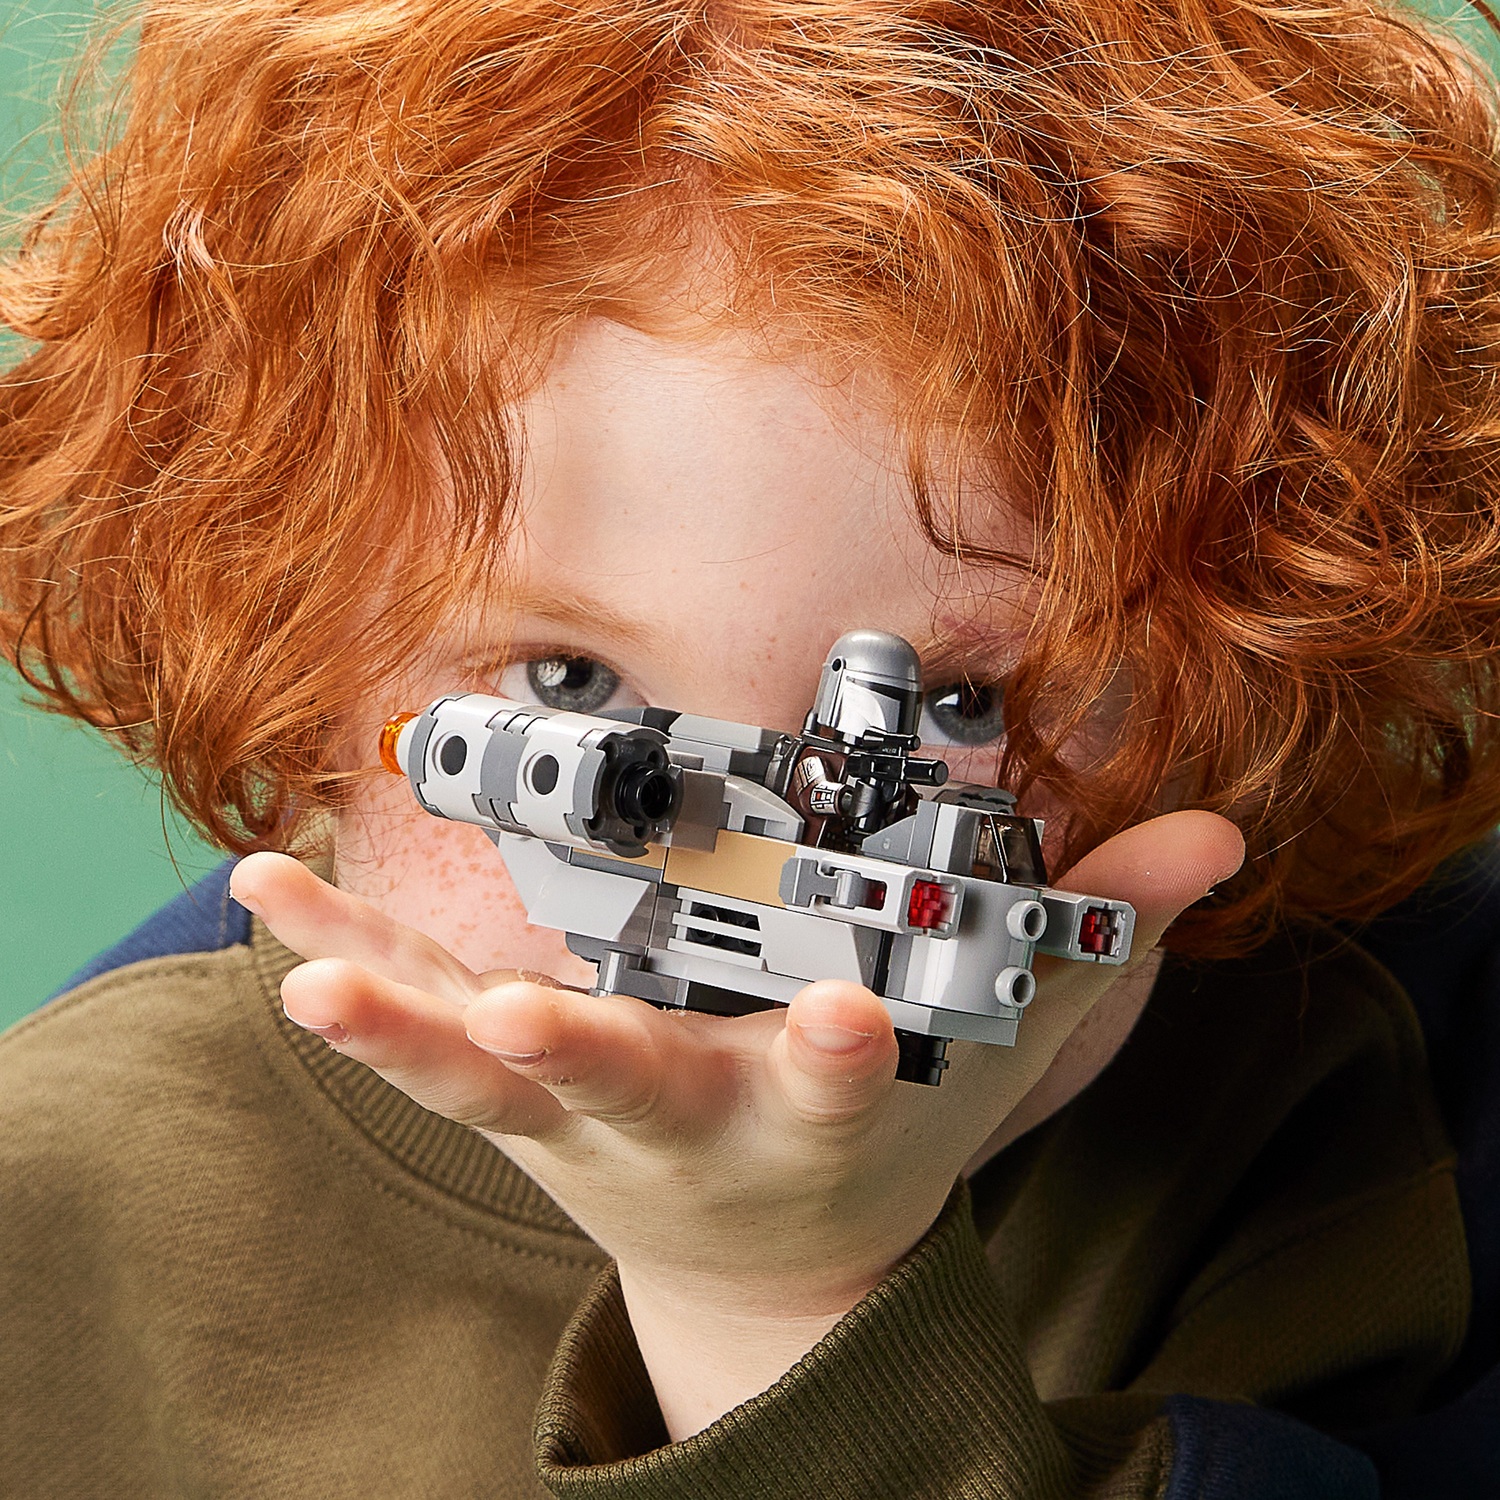 LEGO Star Wars: The Razor Crest Microfighter